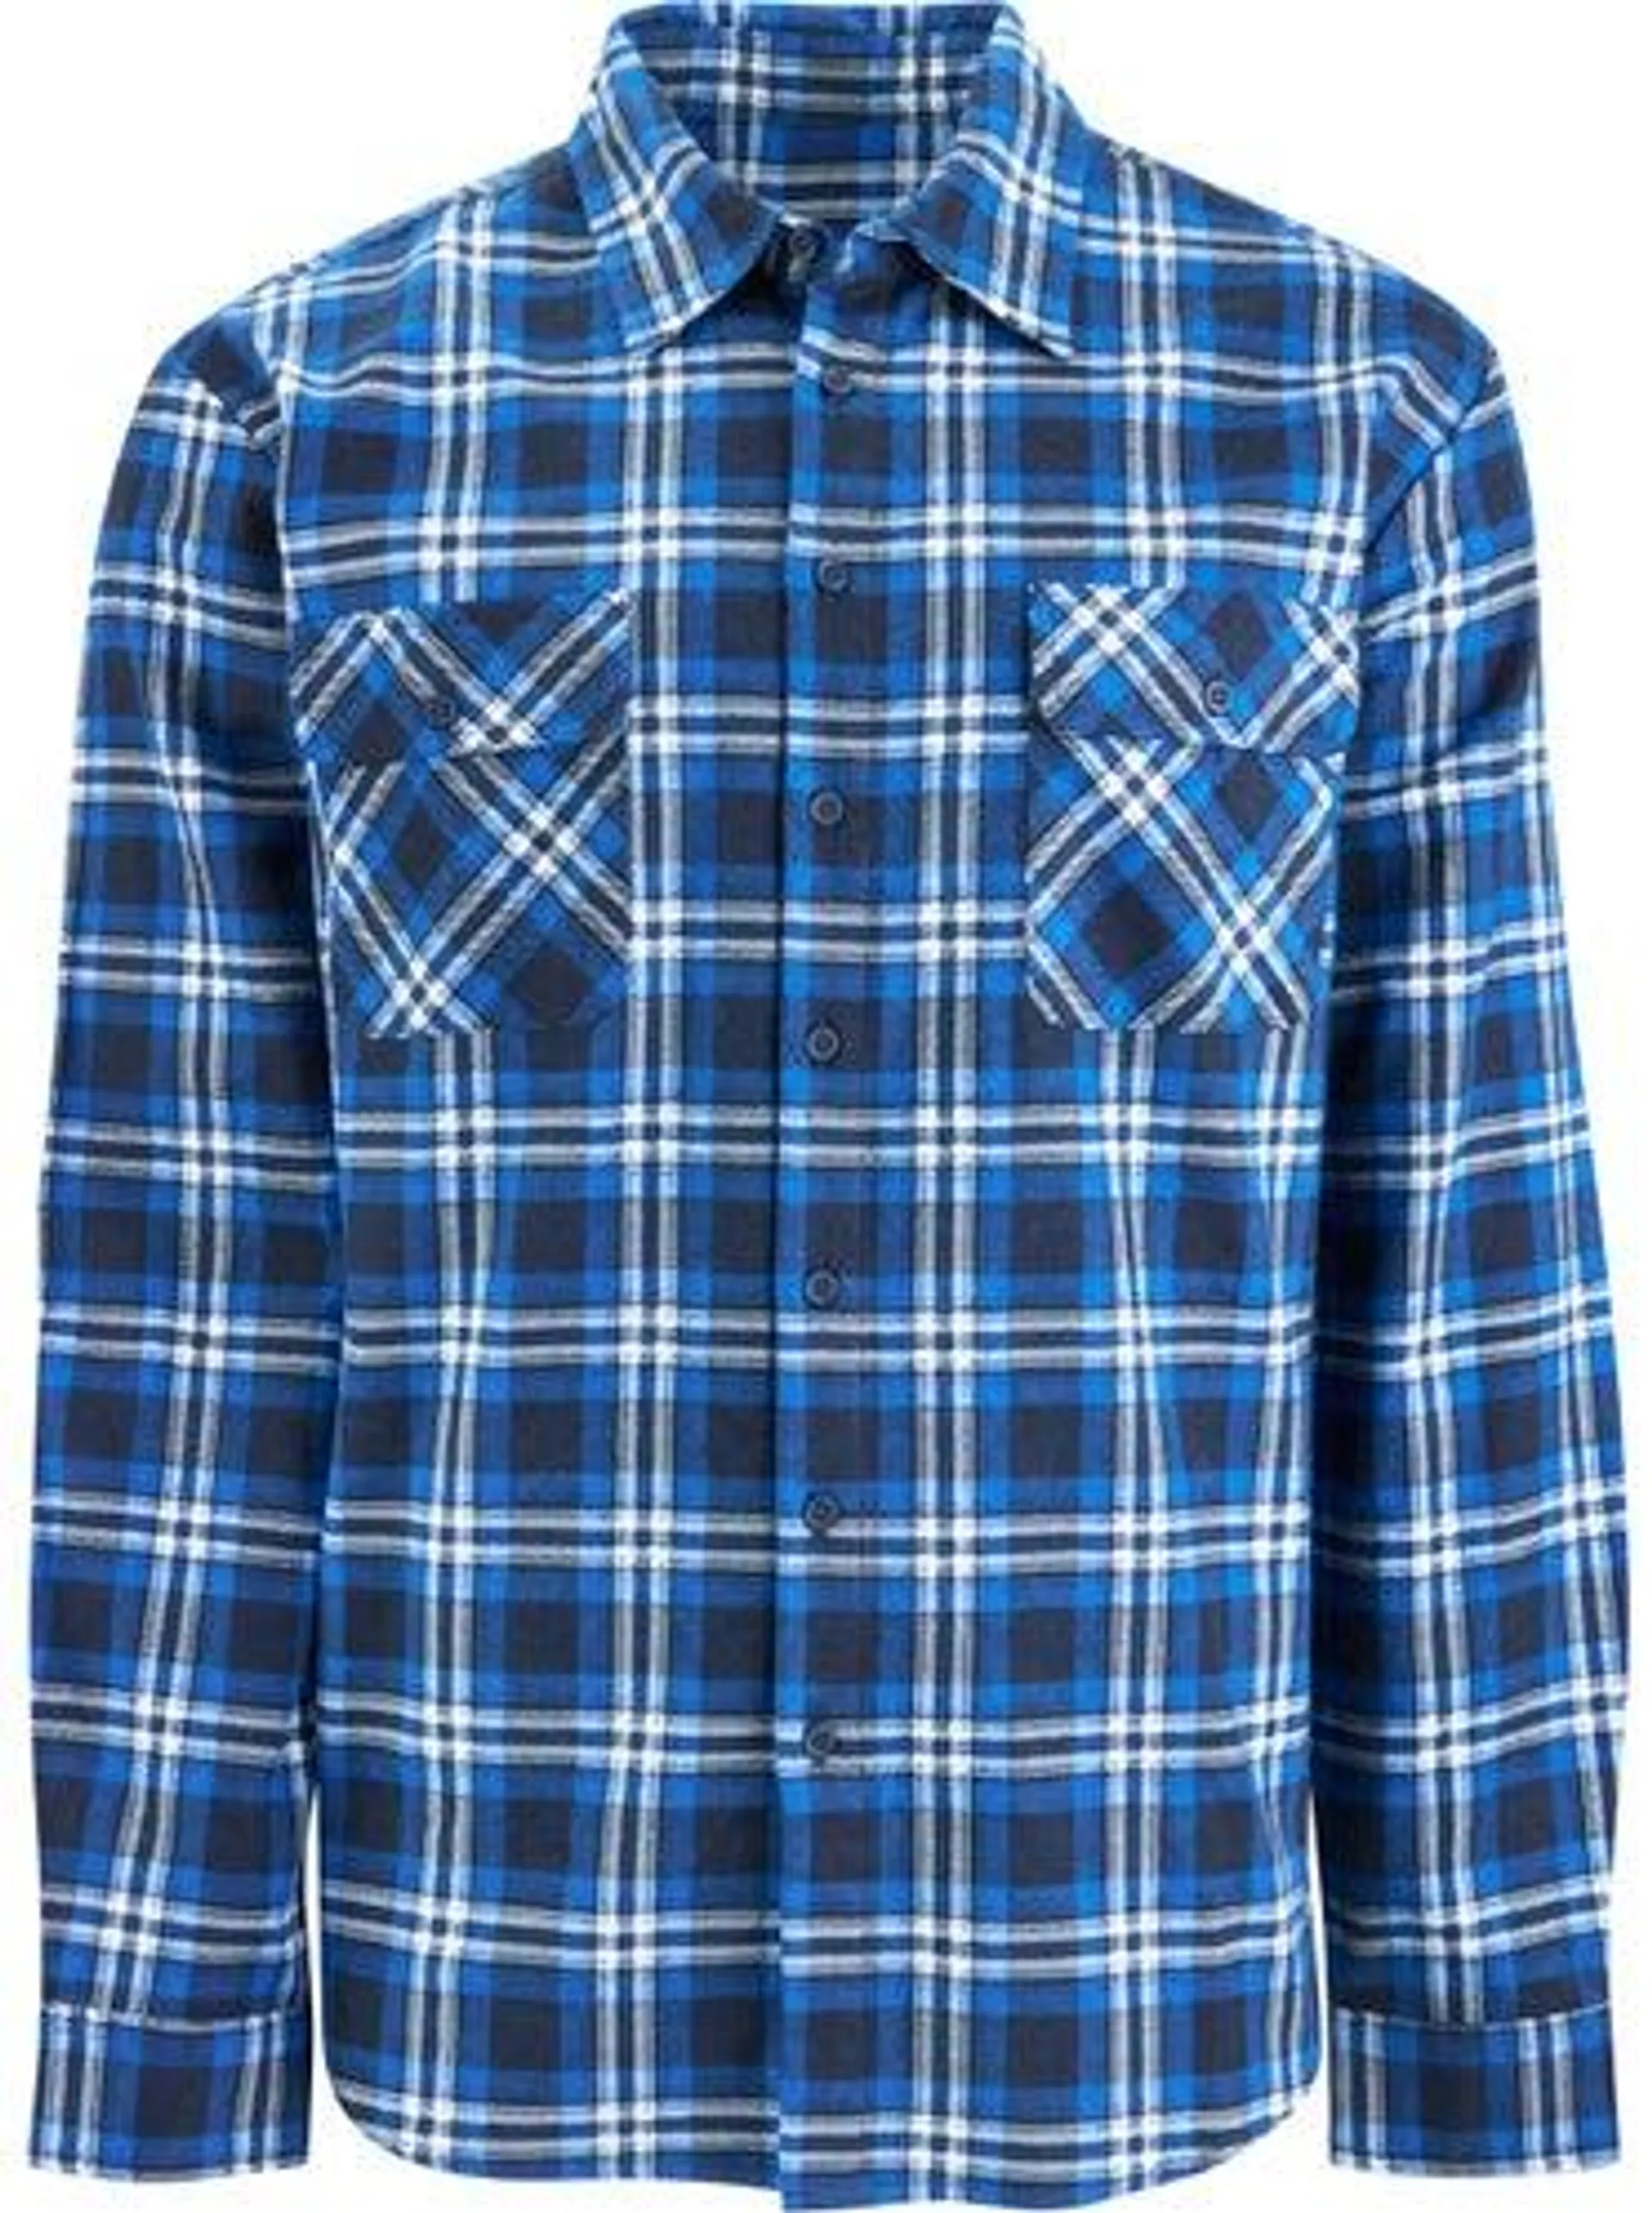 Men's Flannel Shirt in Blue